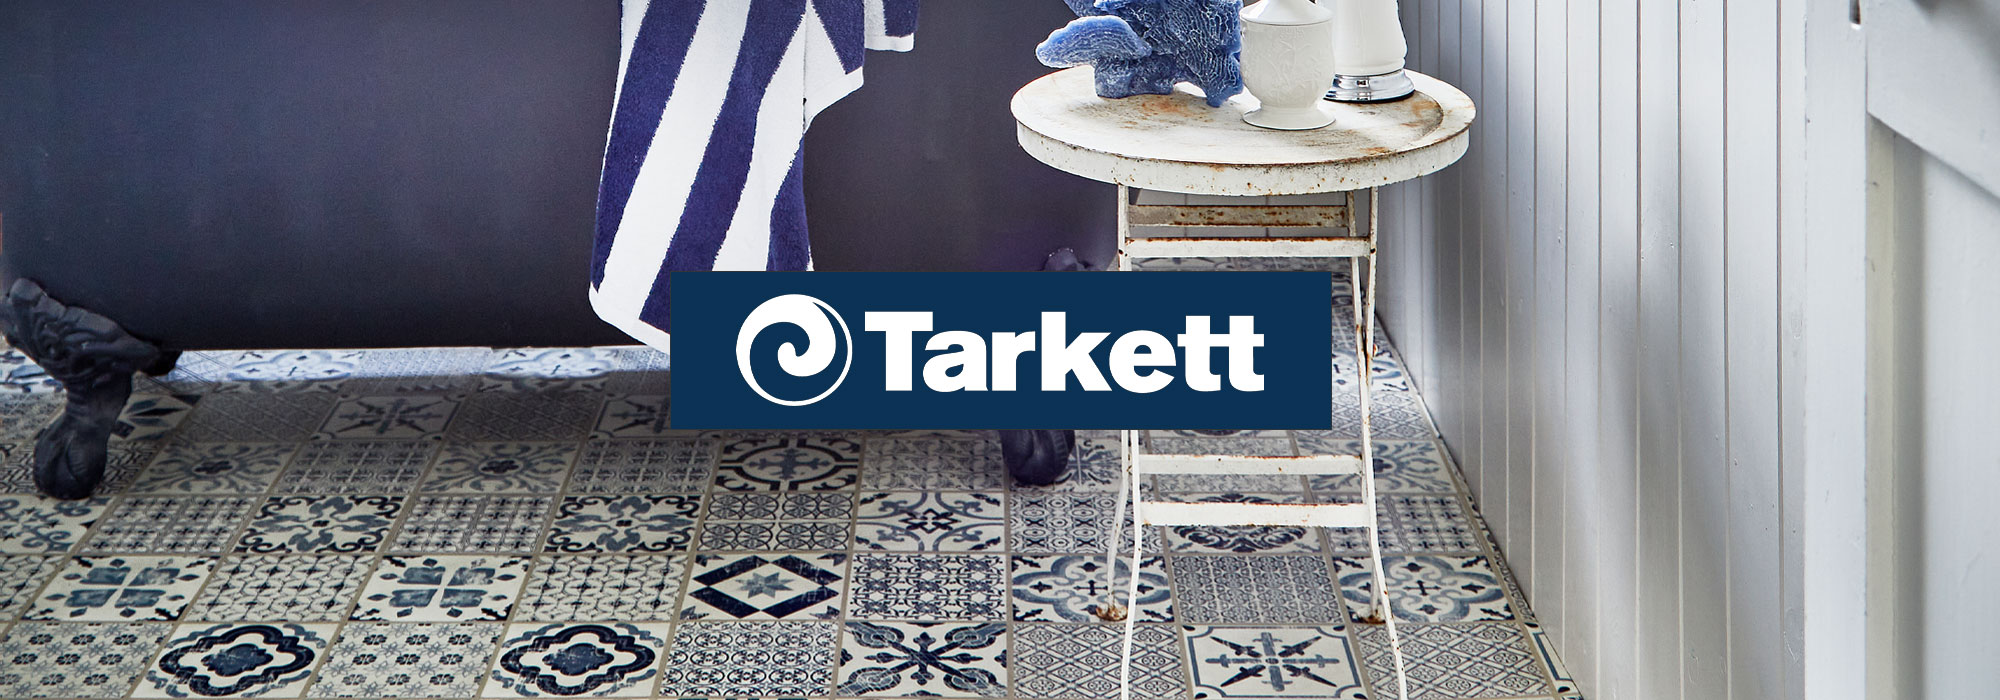 Tarkett Luxury Vinyl Tiles Carpetright, Tarkett Moroccan Vinyl Floor Tiles